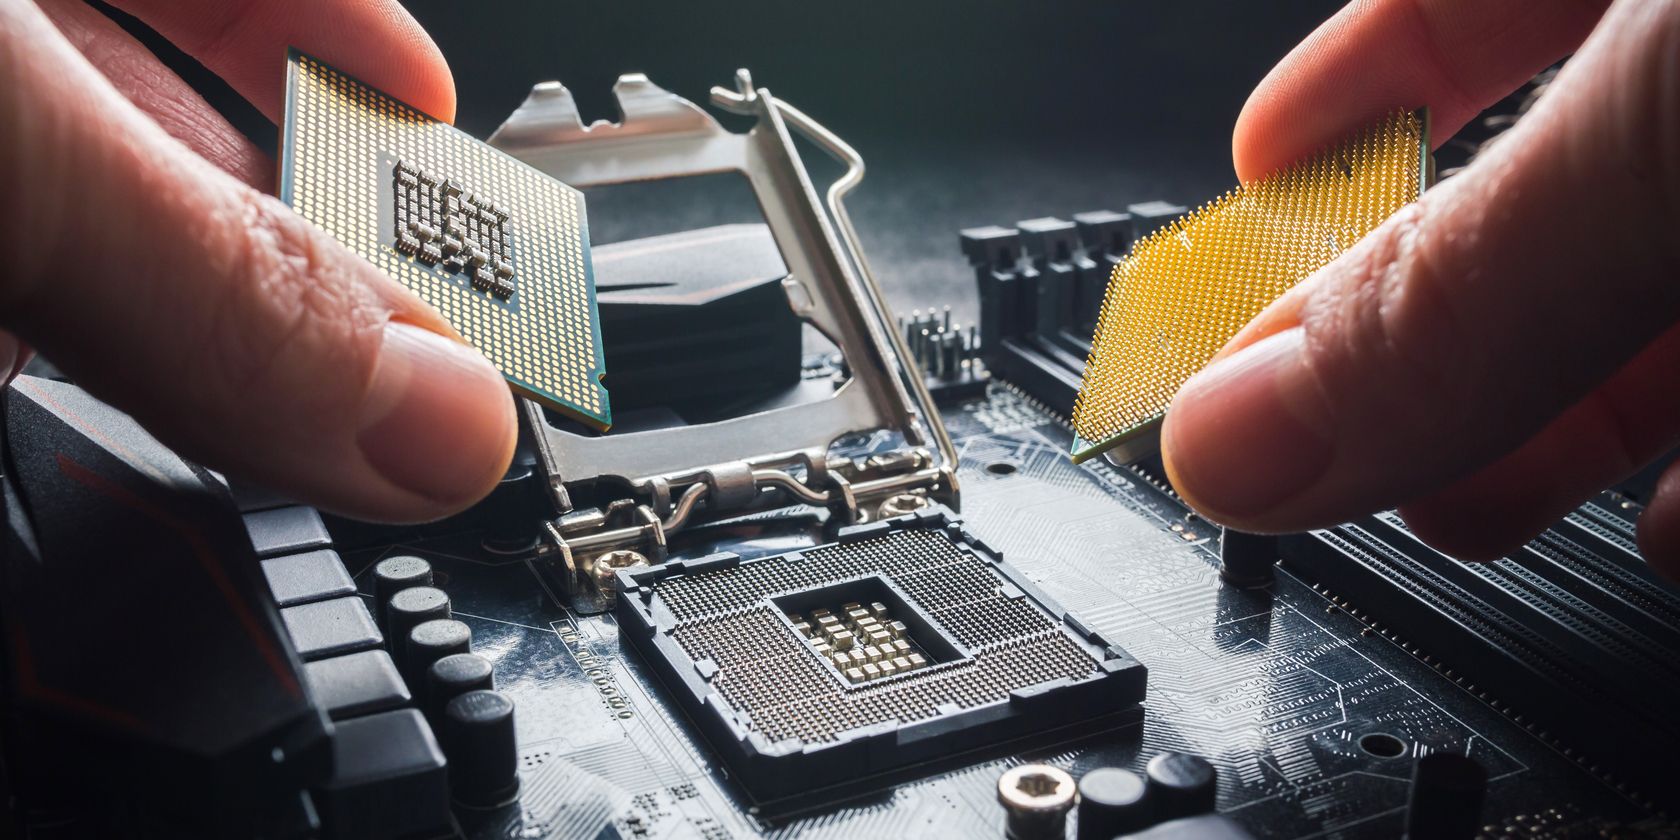 Can You Use An AMD GPU With An Intel CPU?